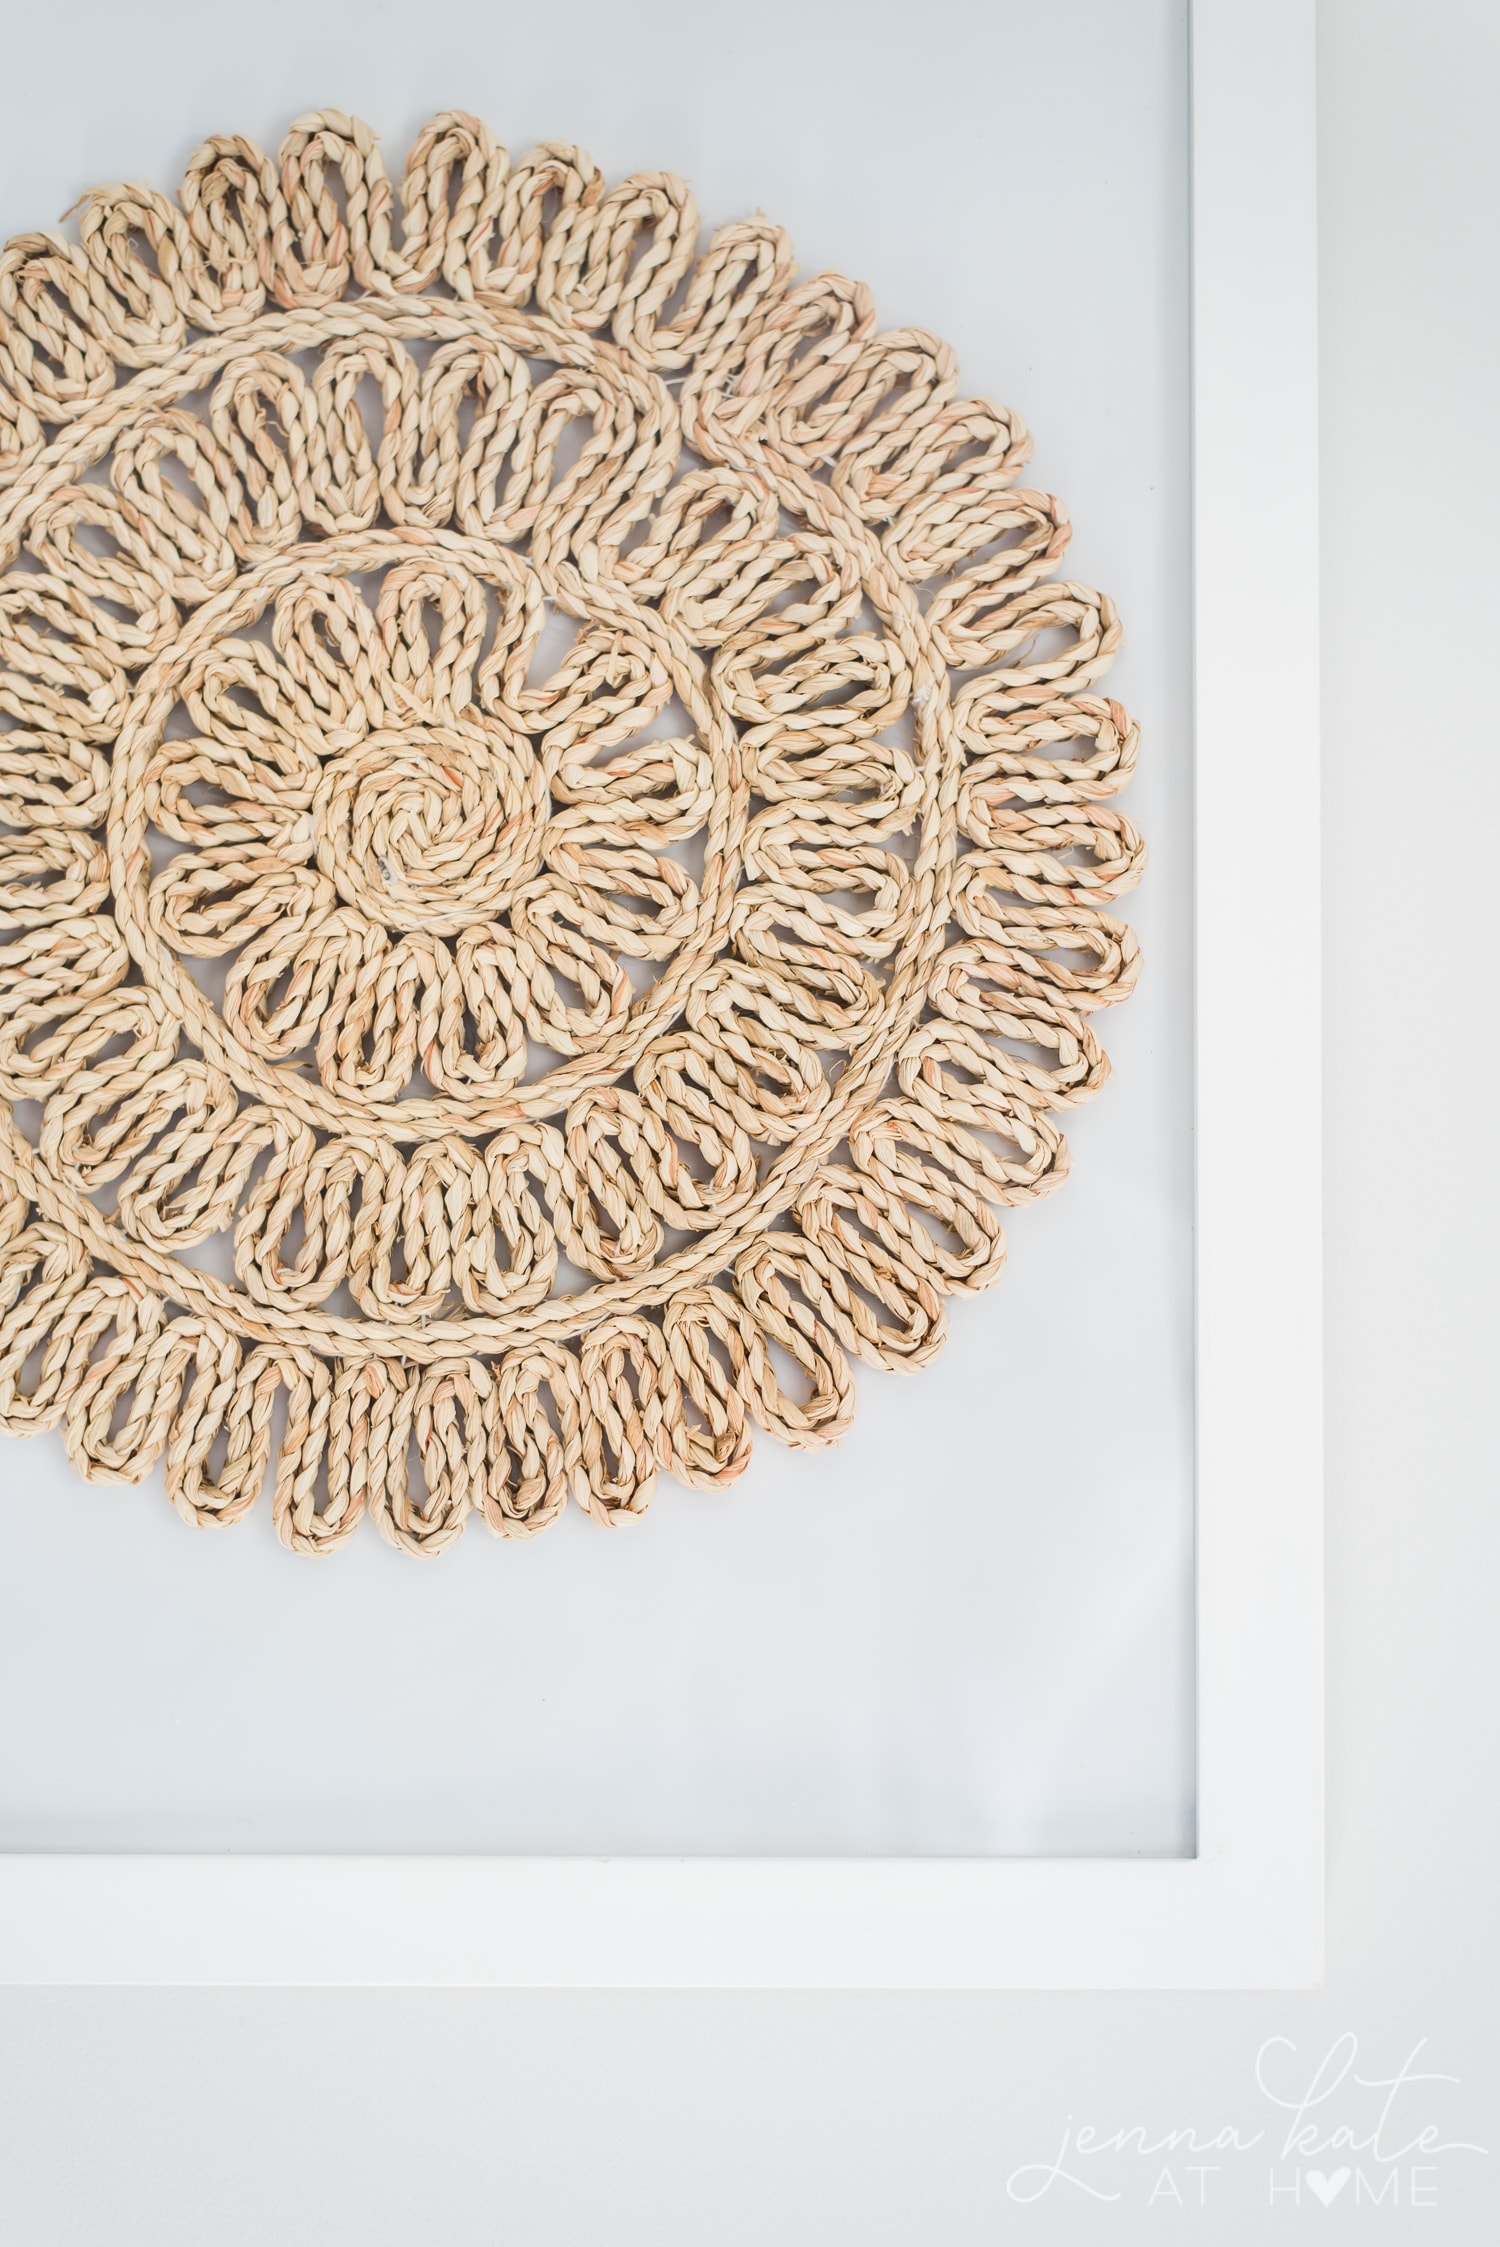 Up close texture of framed rattan place mat